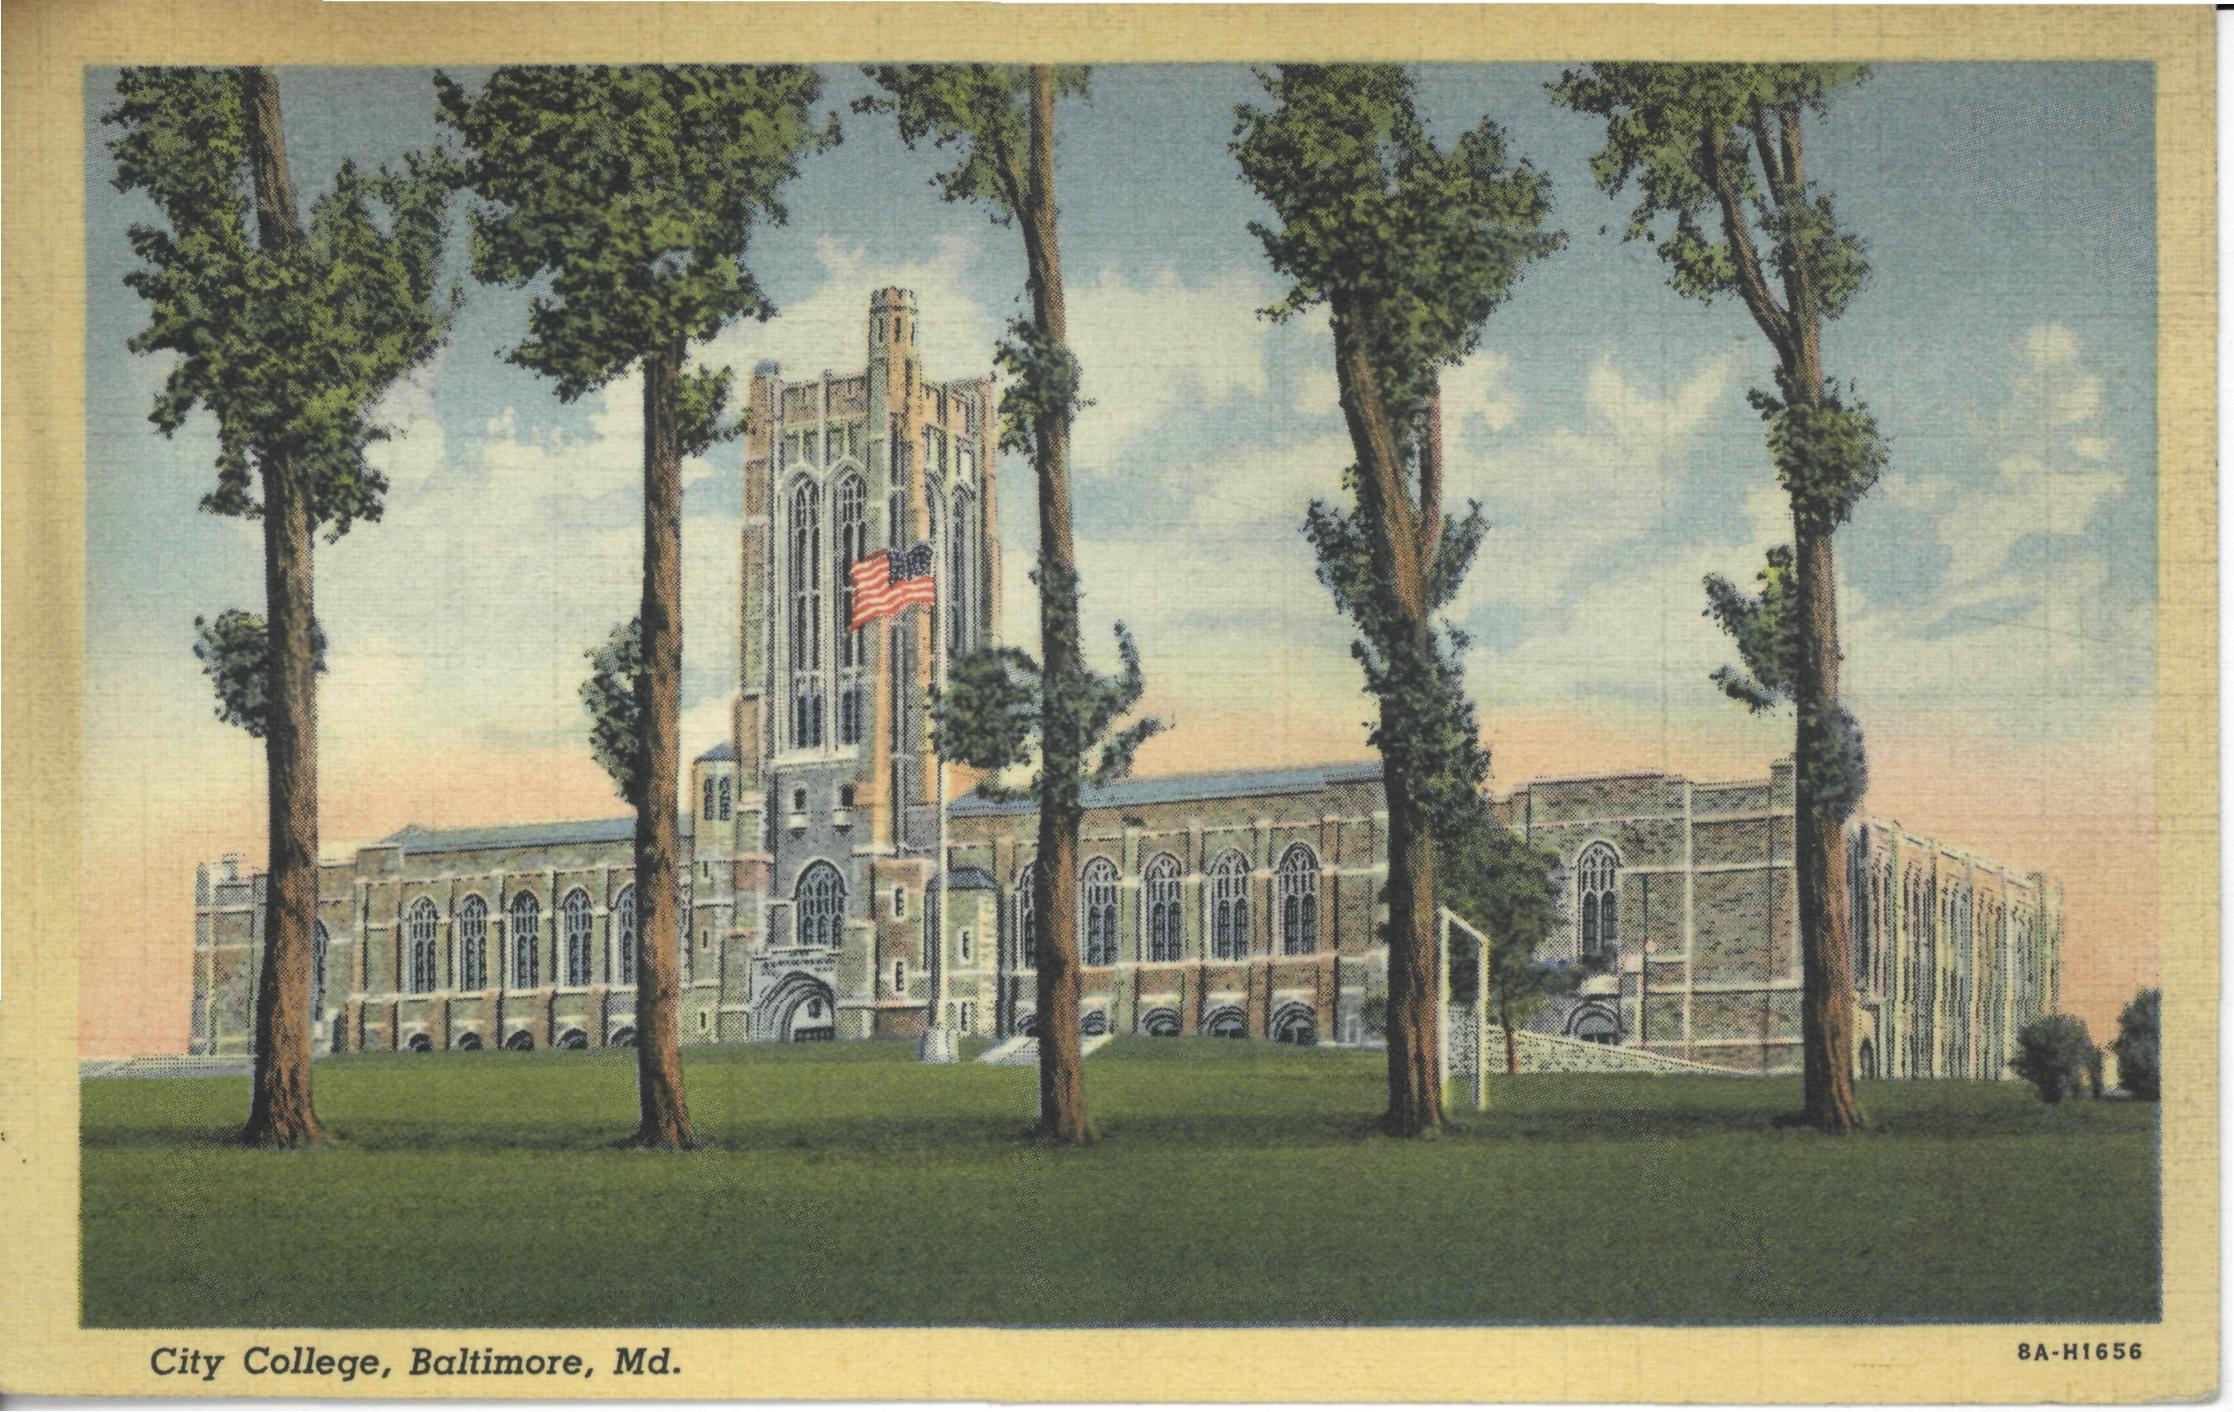 Postcard of City College circa 1940